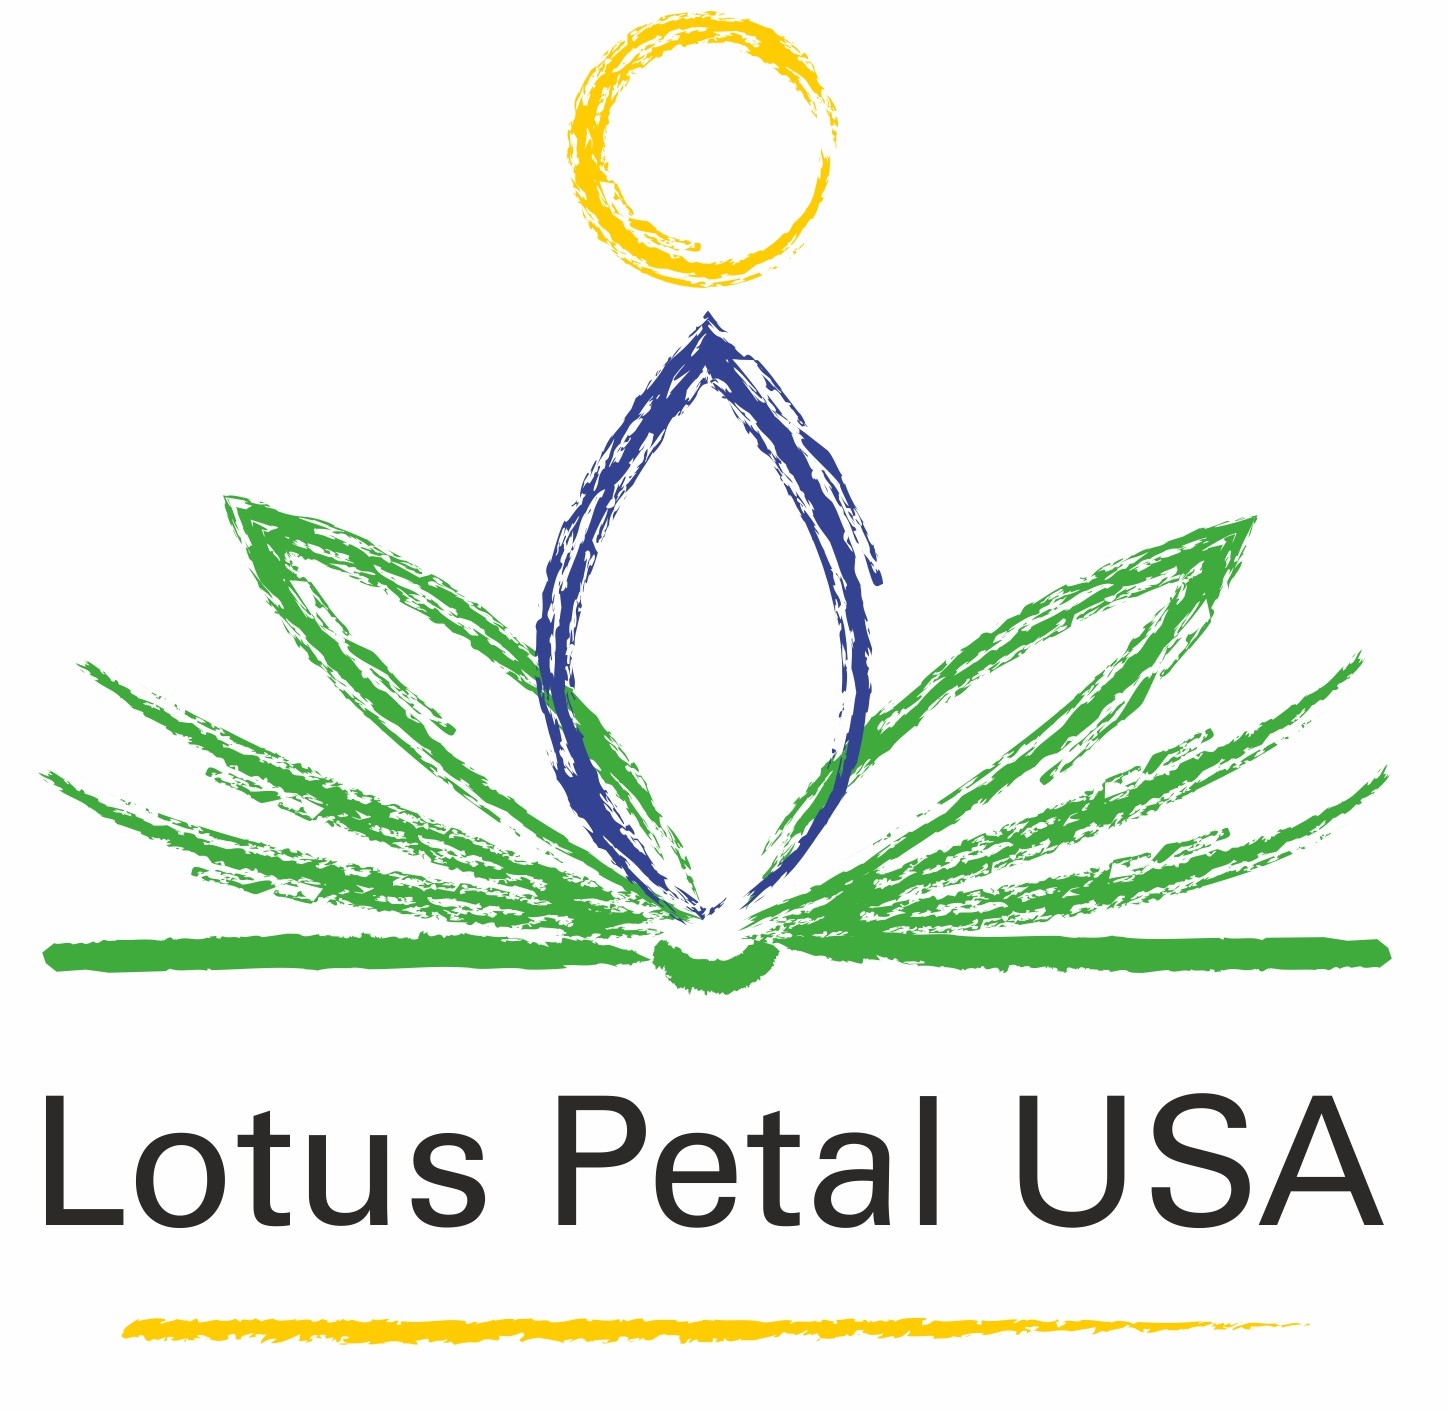 Lotus Petal USA